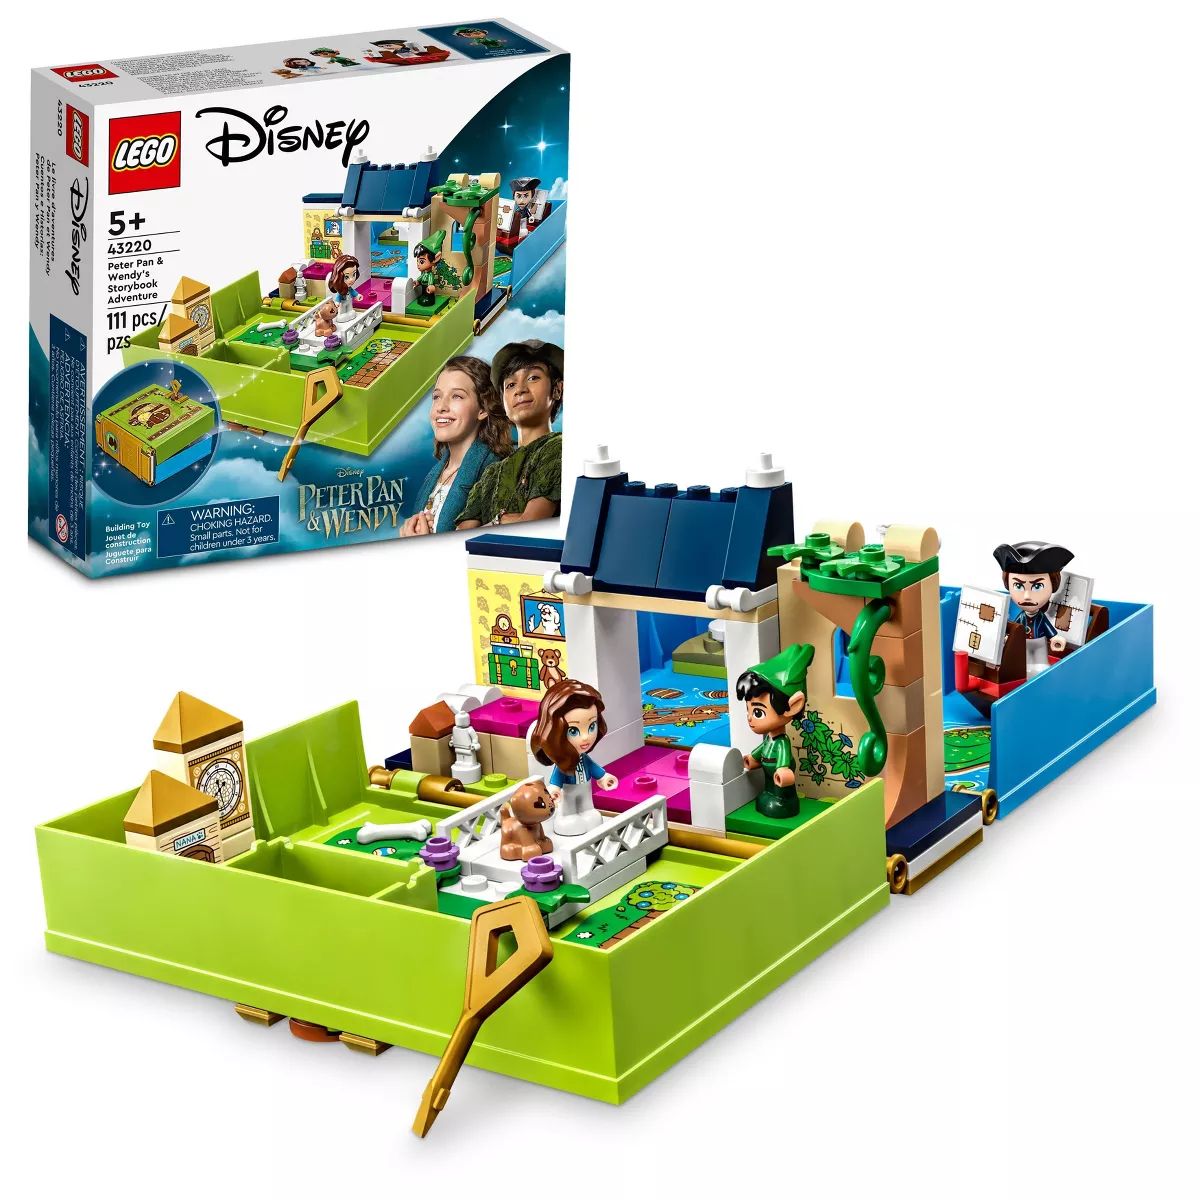 LEGO Disney Peter Pan & Wendy Storybook Adventure Set 43220 | Target